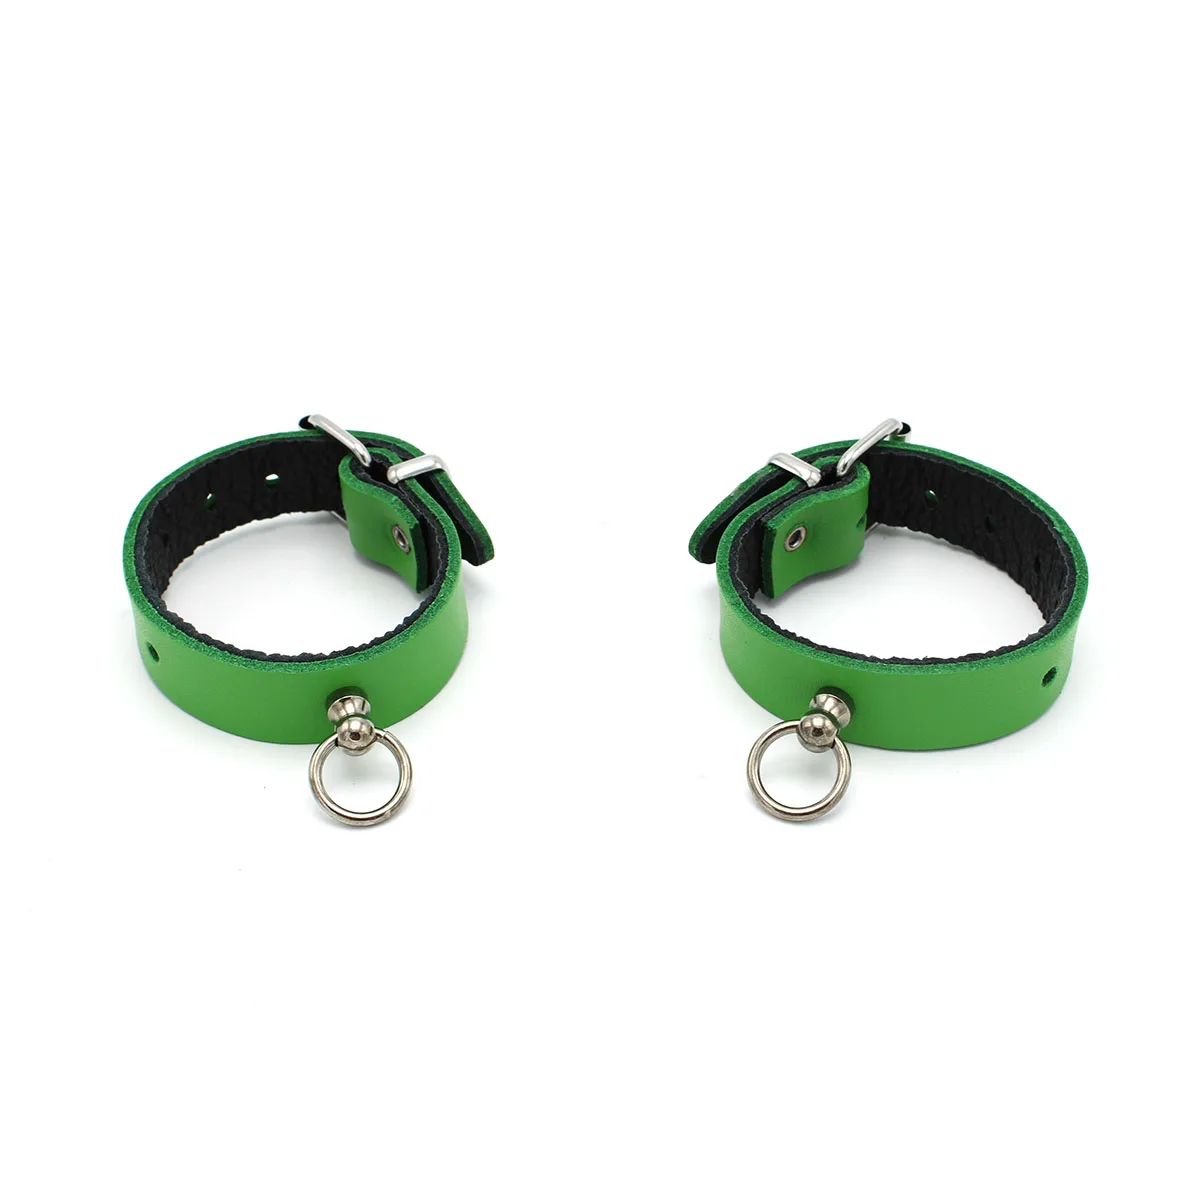 Leather-Handcuffs-Mini-O-Ring-Green-134-KIO-0366-1